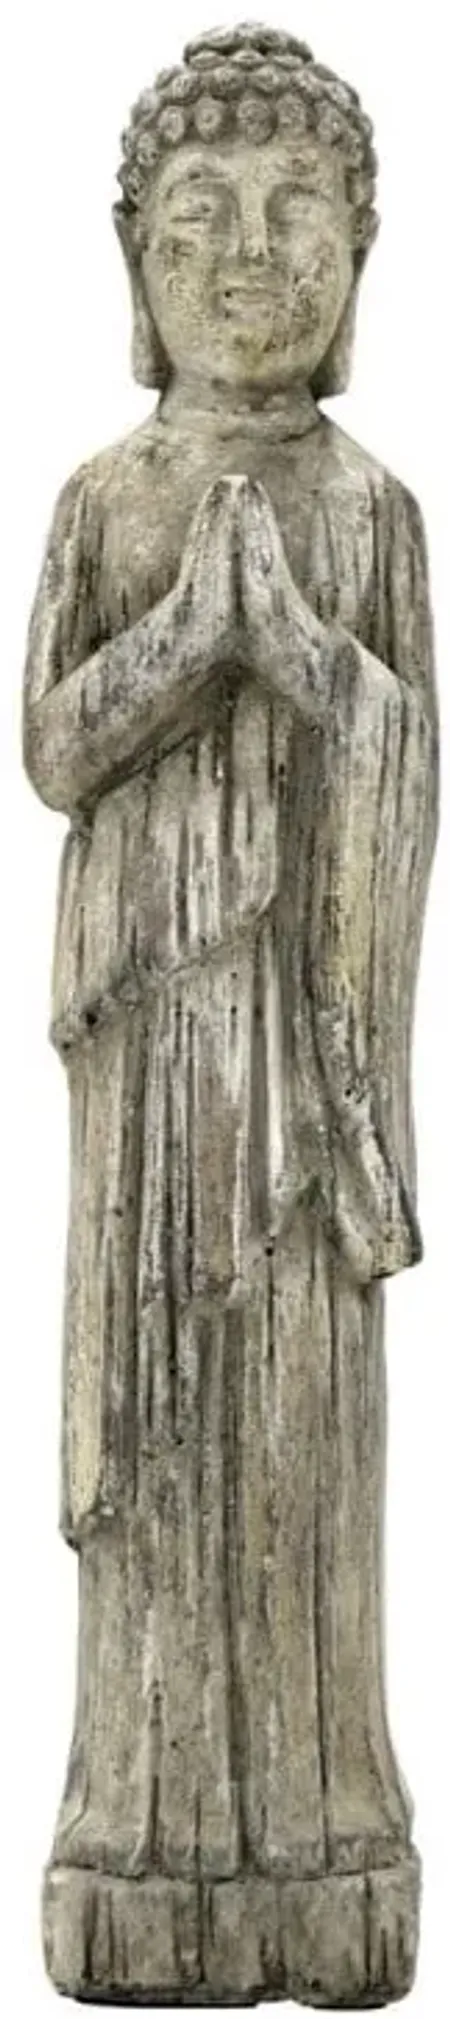 Grey Standing Buddha Figurine 4"W x 19"H